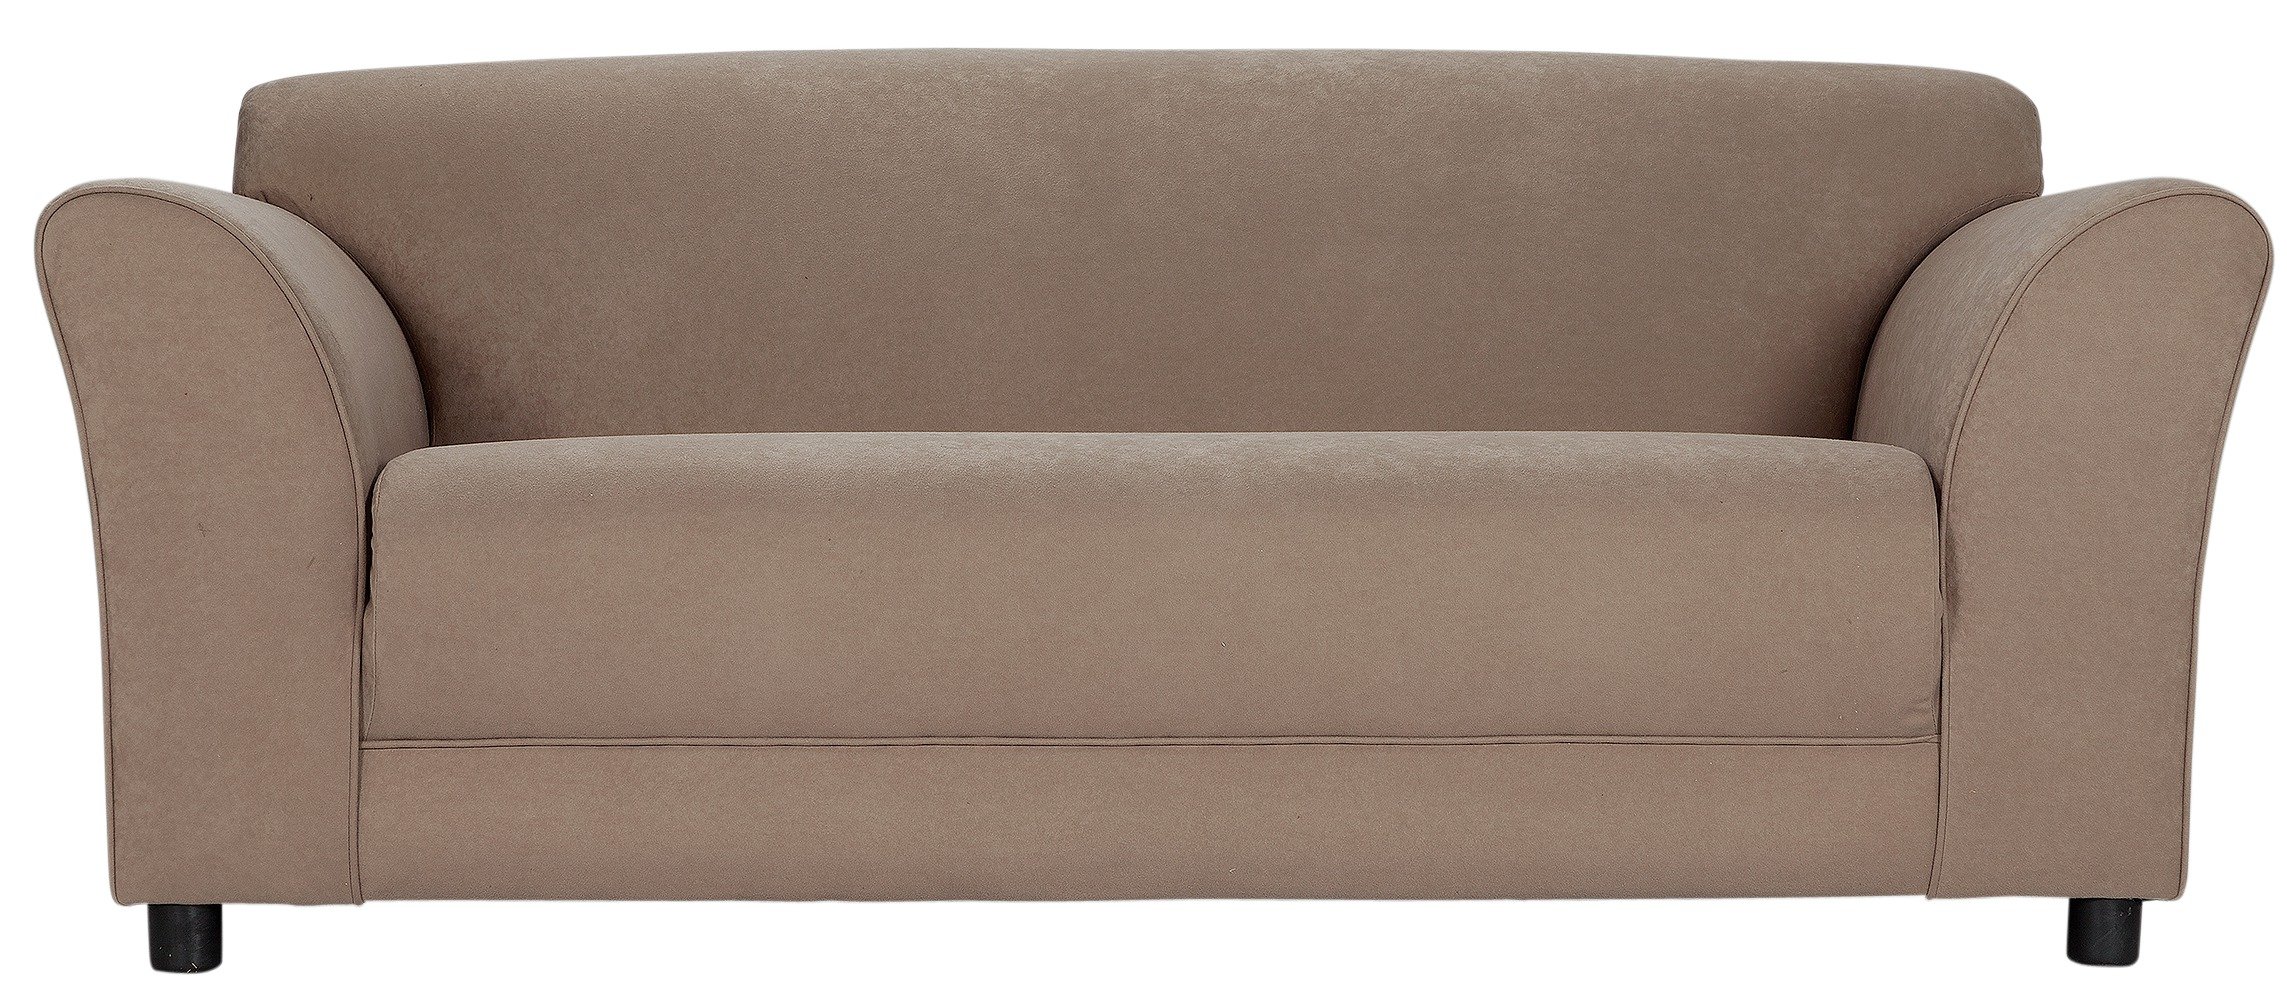 Argos Home Jenna Compact 3 Seater Fabric Sofa - Mink